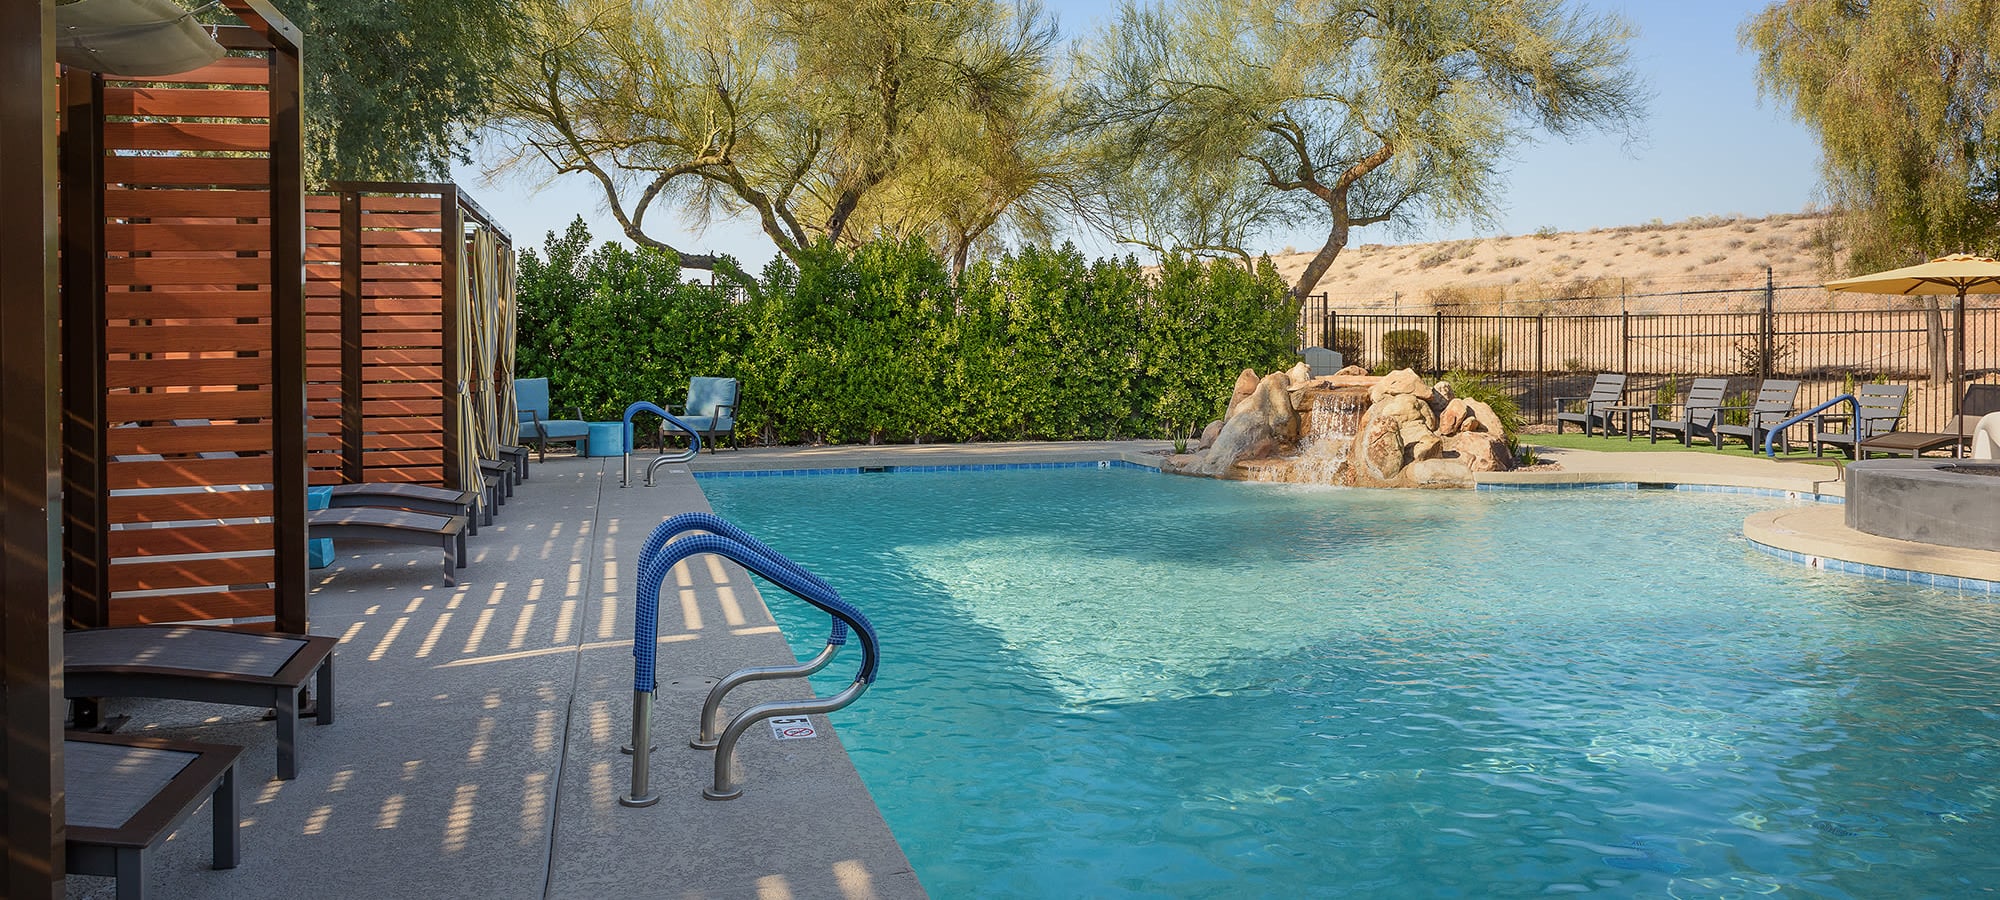 Swimming pool at The Regents at Scottsdale in Scottsdale, Arizona